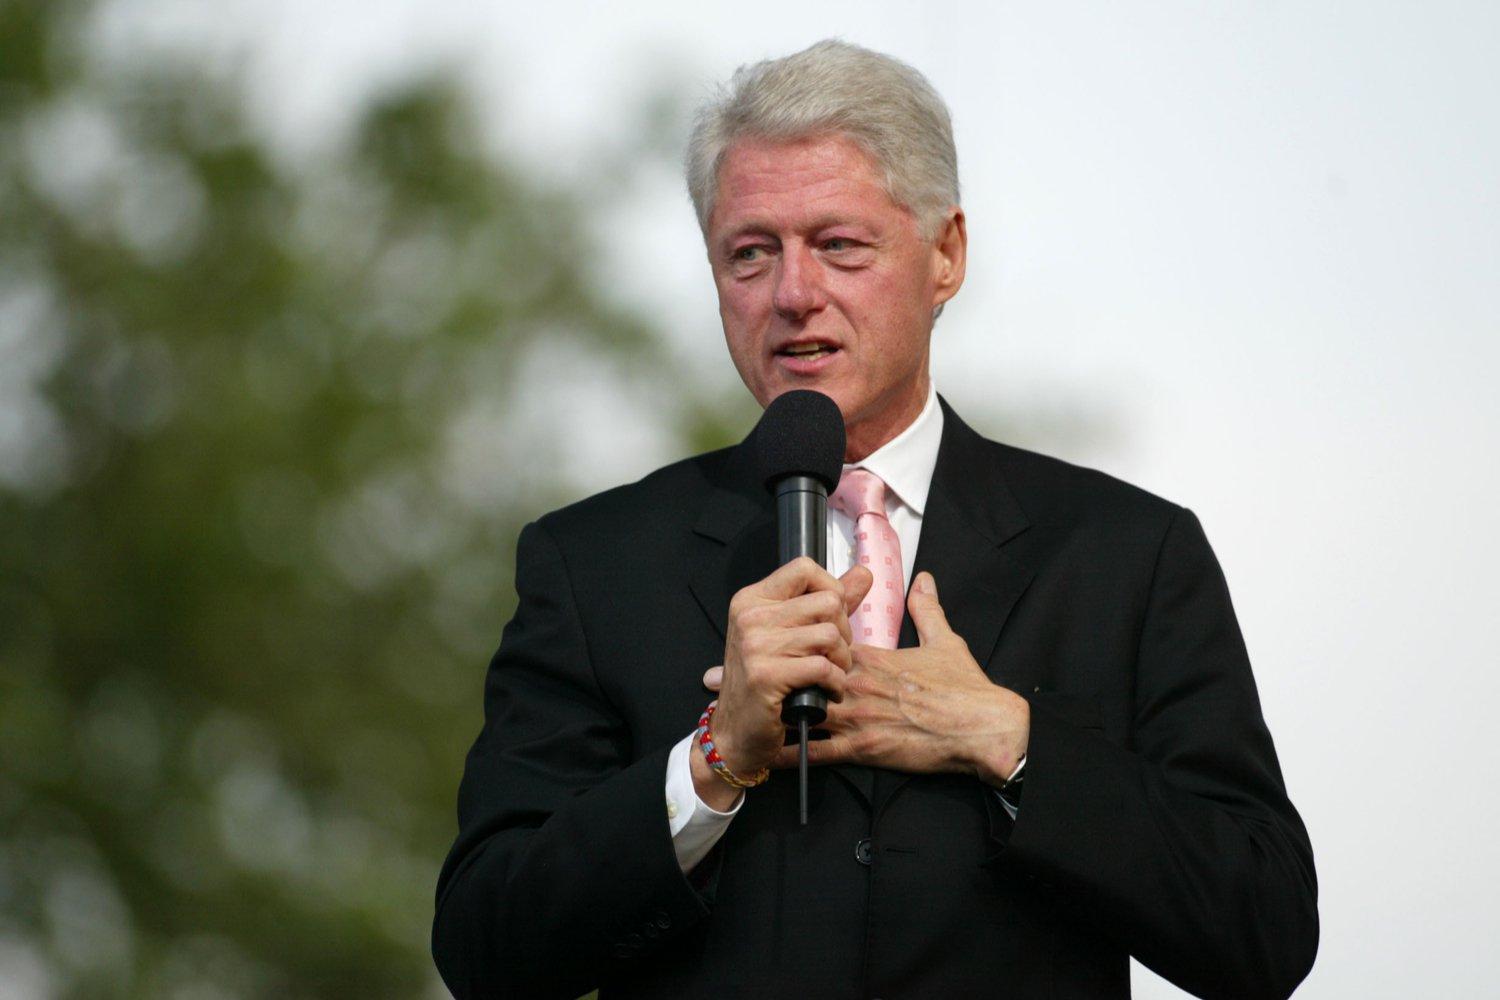 Ripple Taps Bill Clinton To Give Keynote At Upcoming Conference